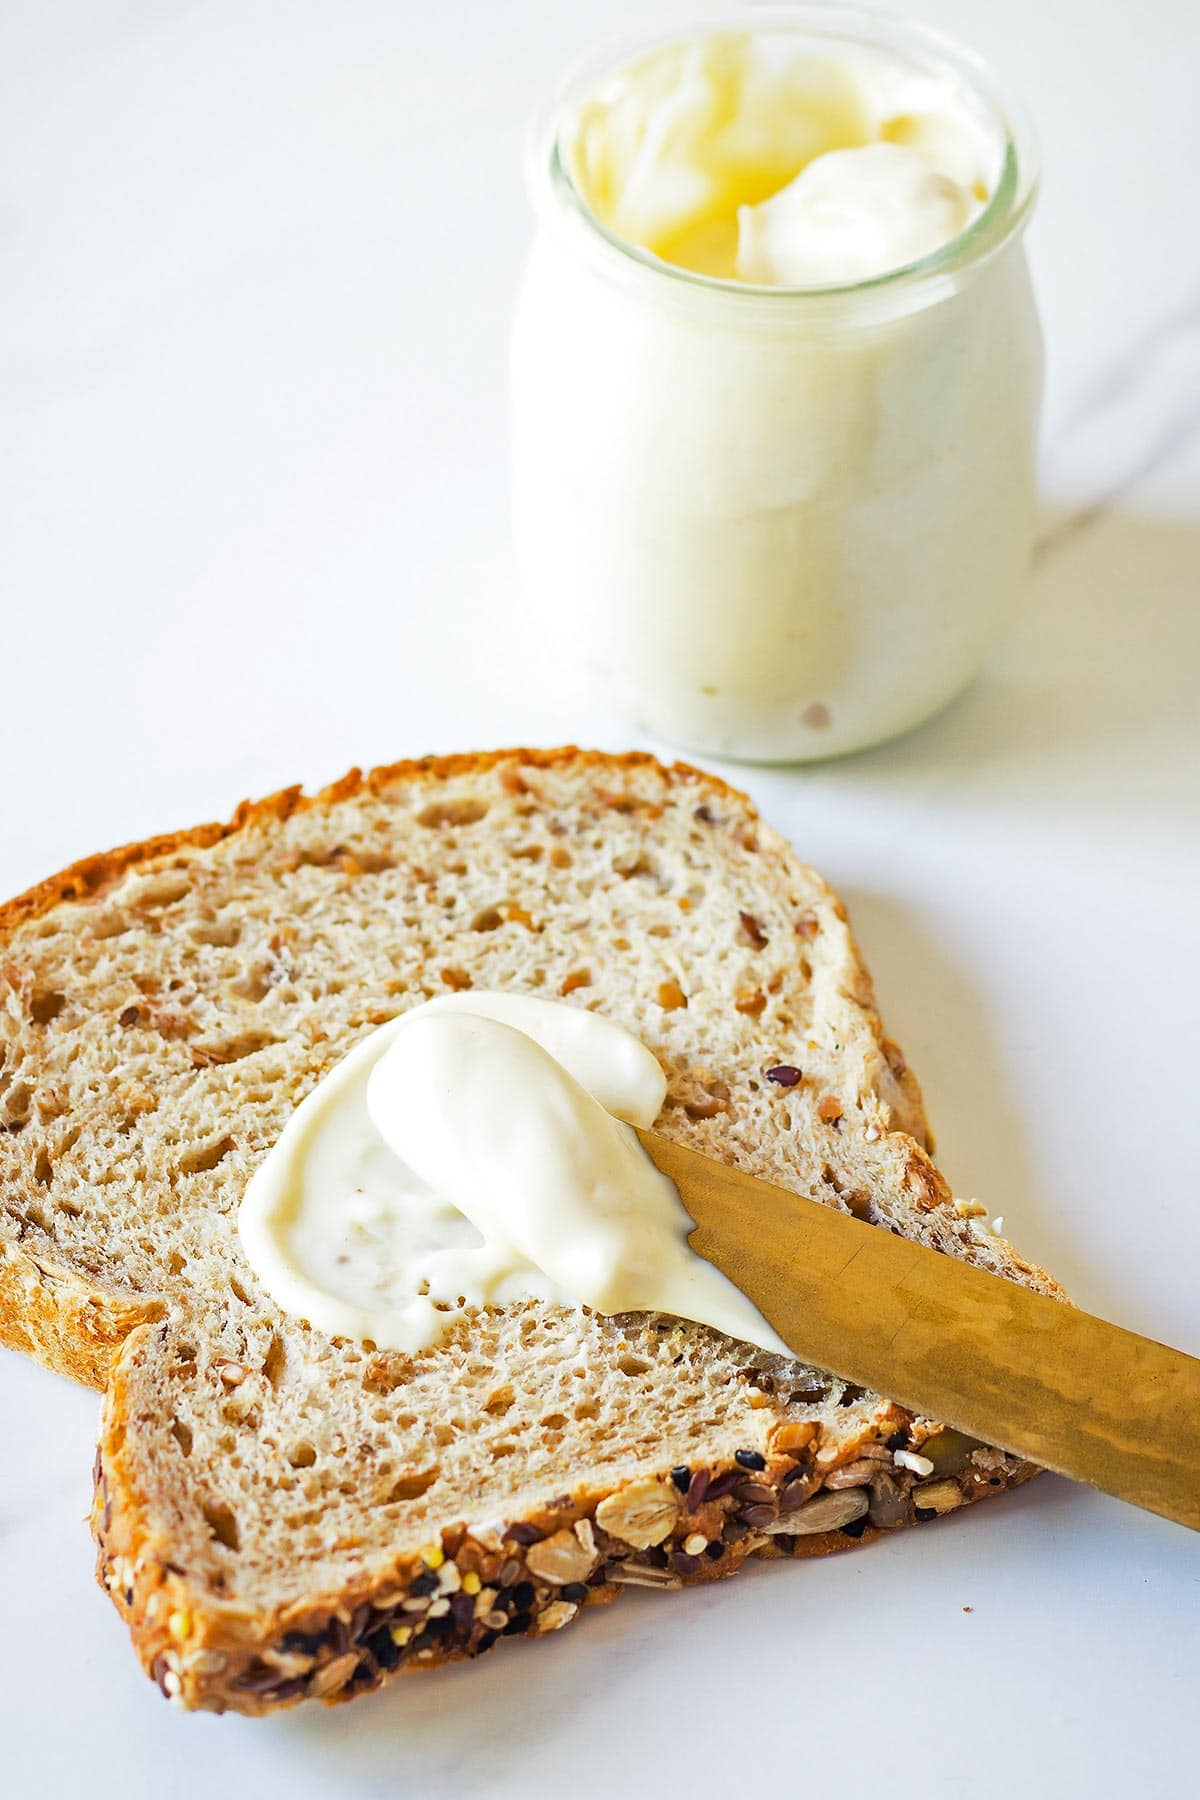 Knife spreading mayonnaise on bread slice